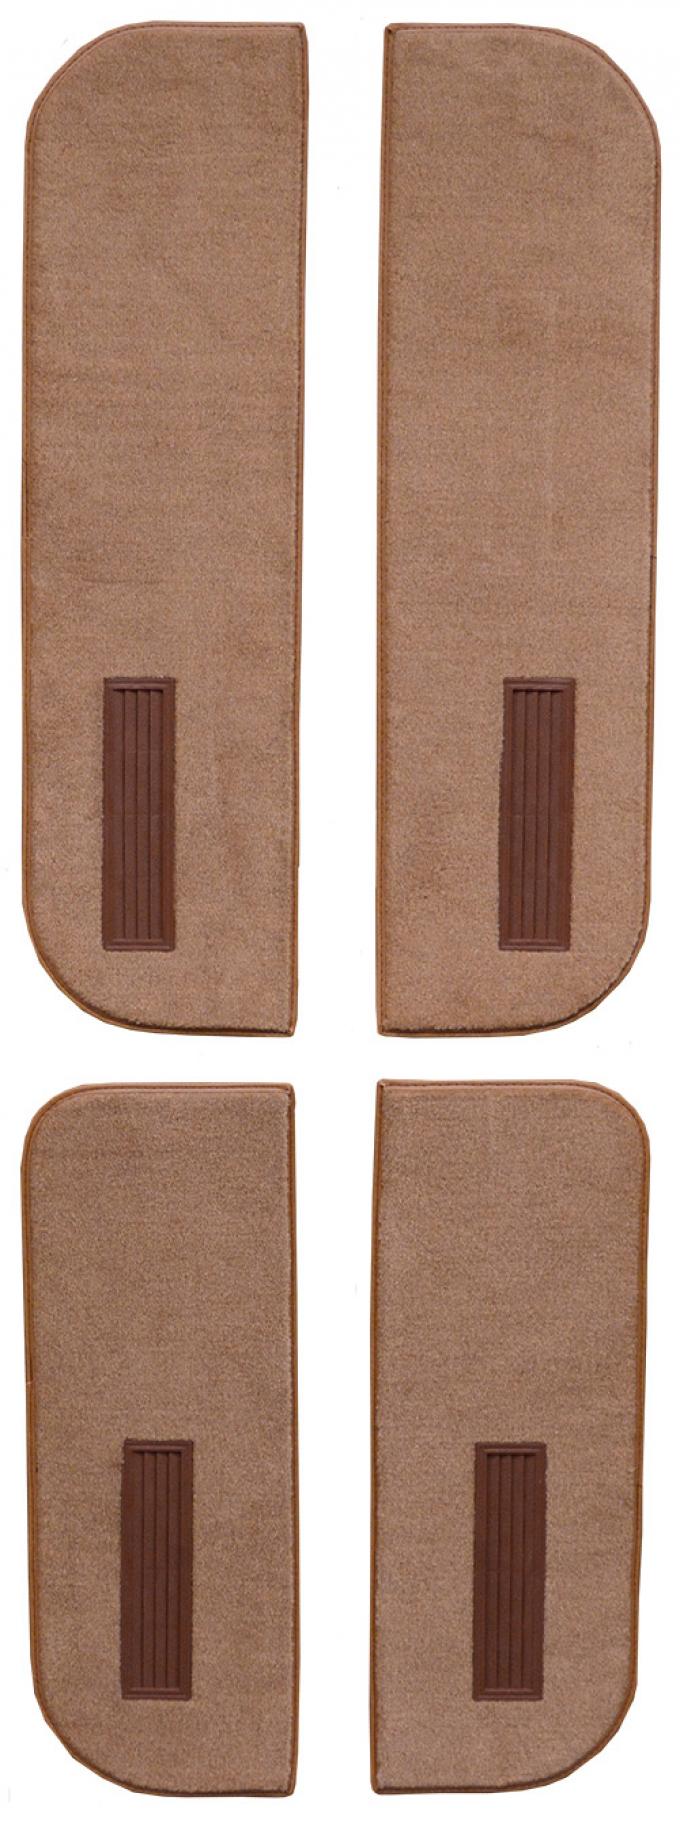 ACC 1989-1991 GMC R1500 Suburban Door Panel Inserts on Cardboard w/Vents 4pc Cutpile Carpet